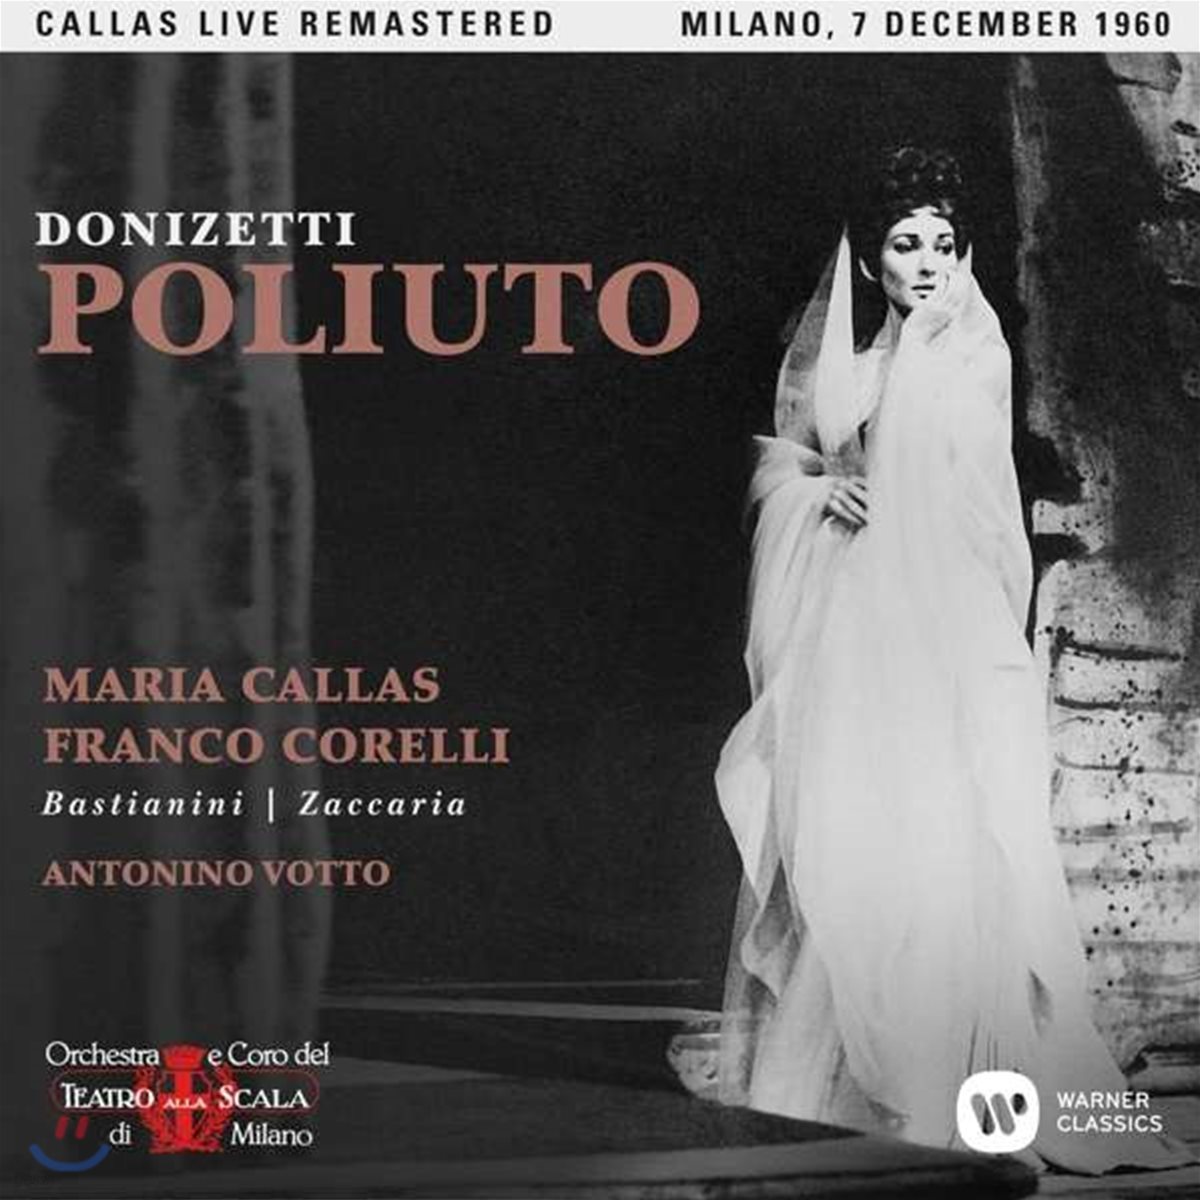 Maria Callas / Franco Corelli 도니제티: 폴리우토 - 마리아 칼라스, 프랑코 코렐리 / 1960년 밀라노 라 스칼라 실황 (Donizetti: Poliuto)